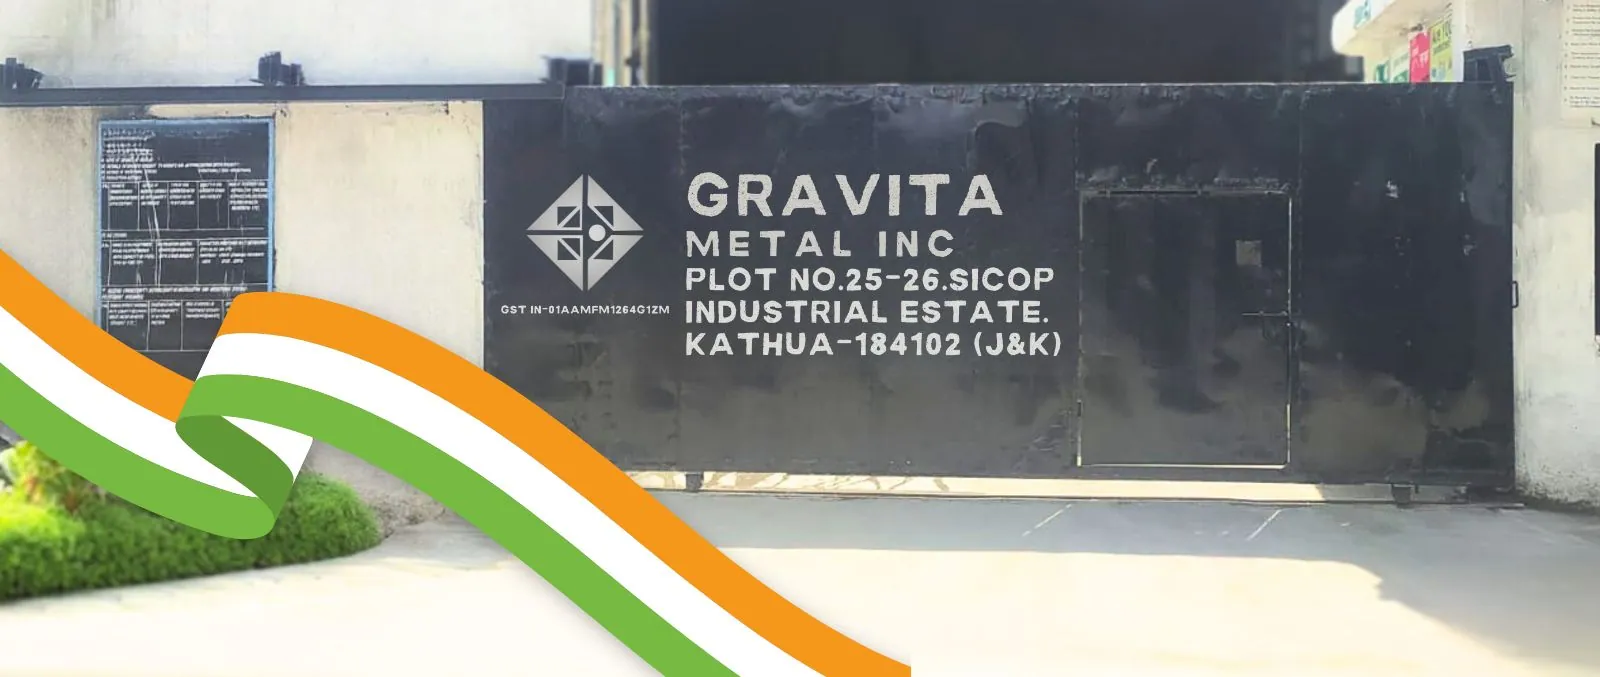 <p>Gravita Metal Inc - Kathua</p>